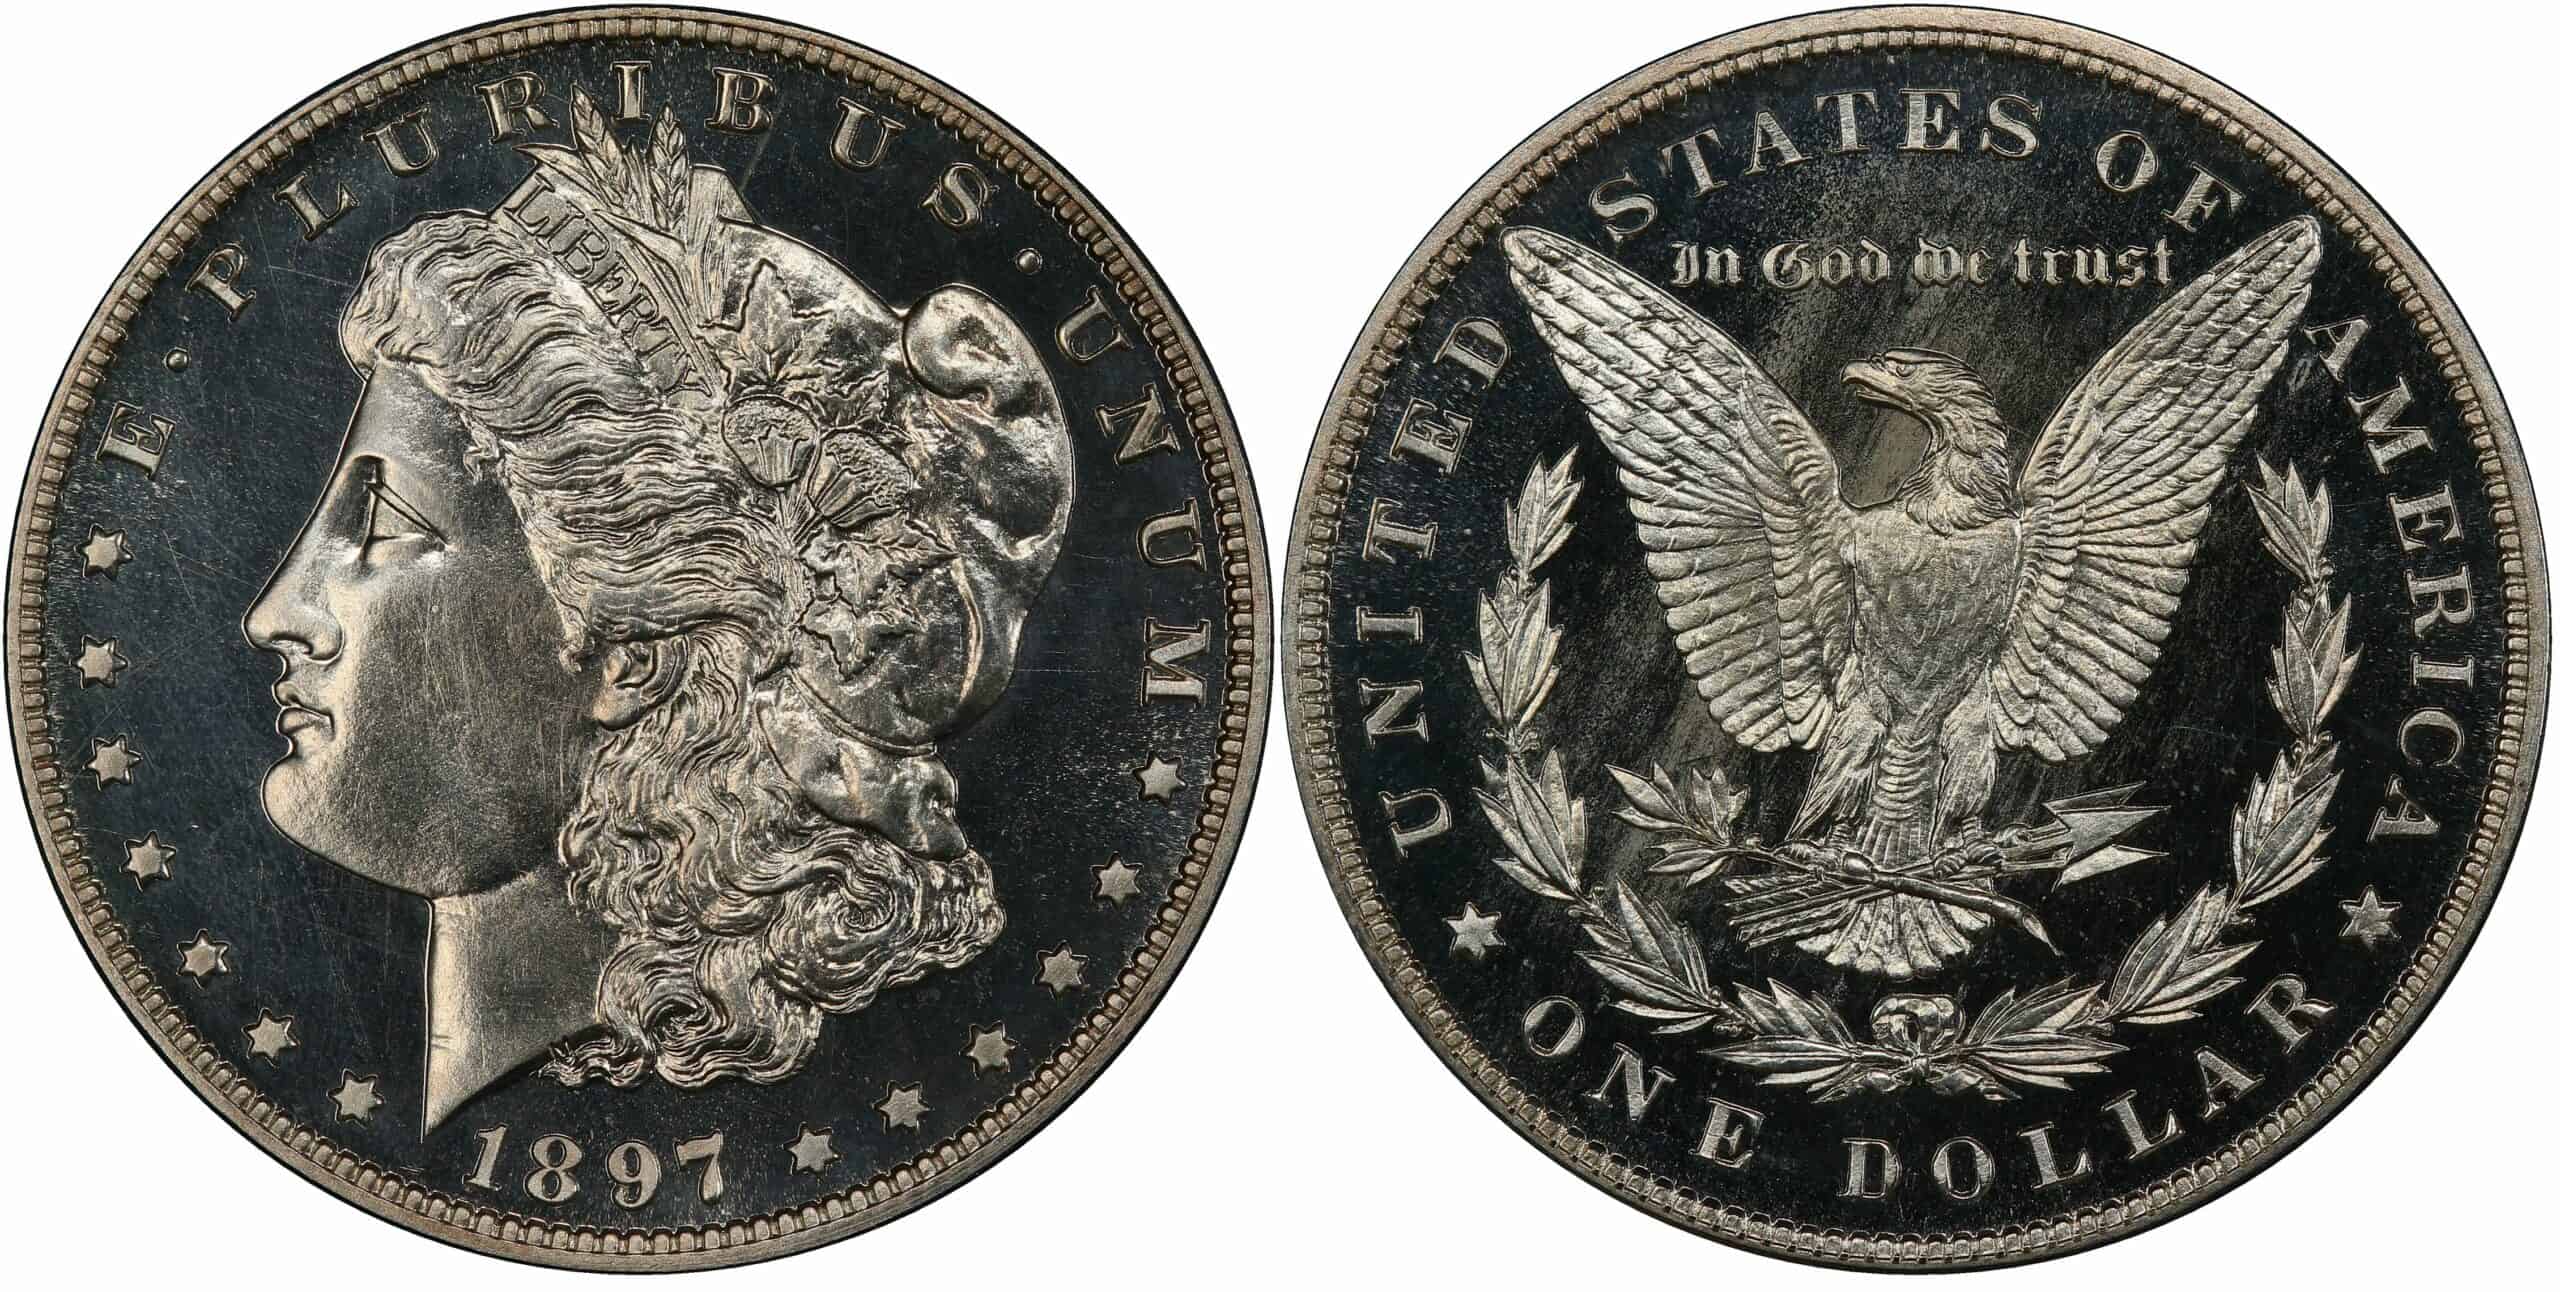 1897 silver proof Morgan dollar